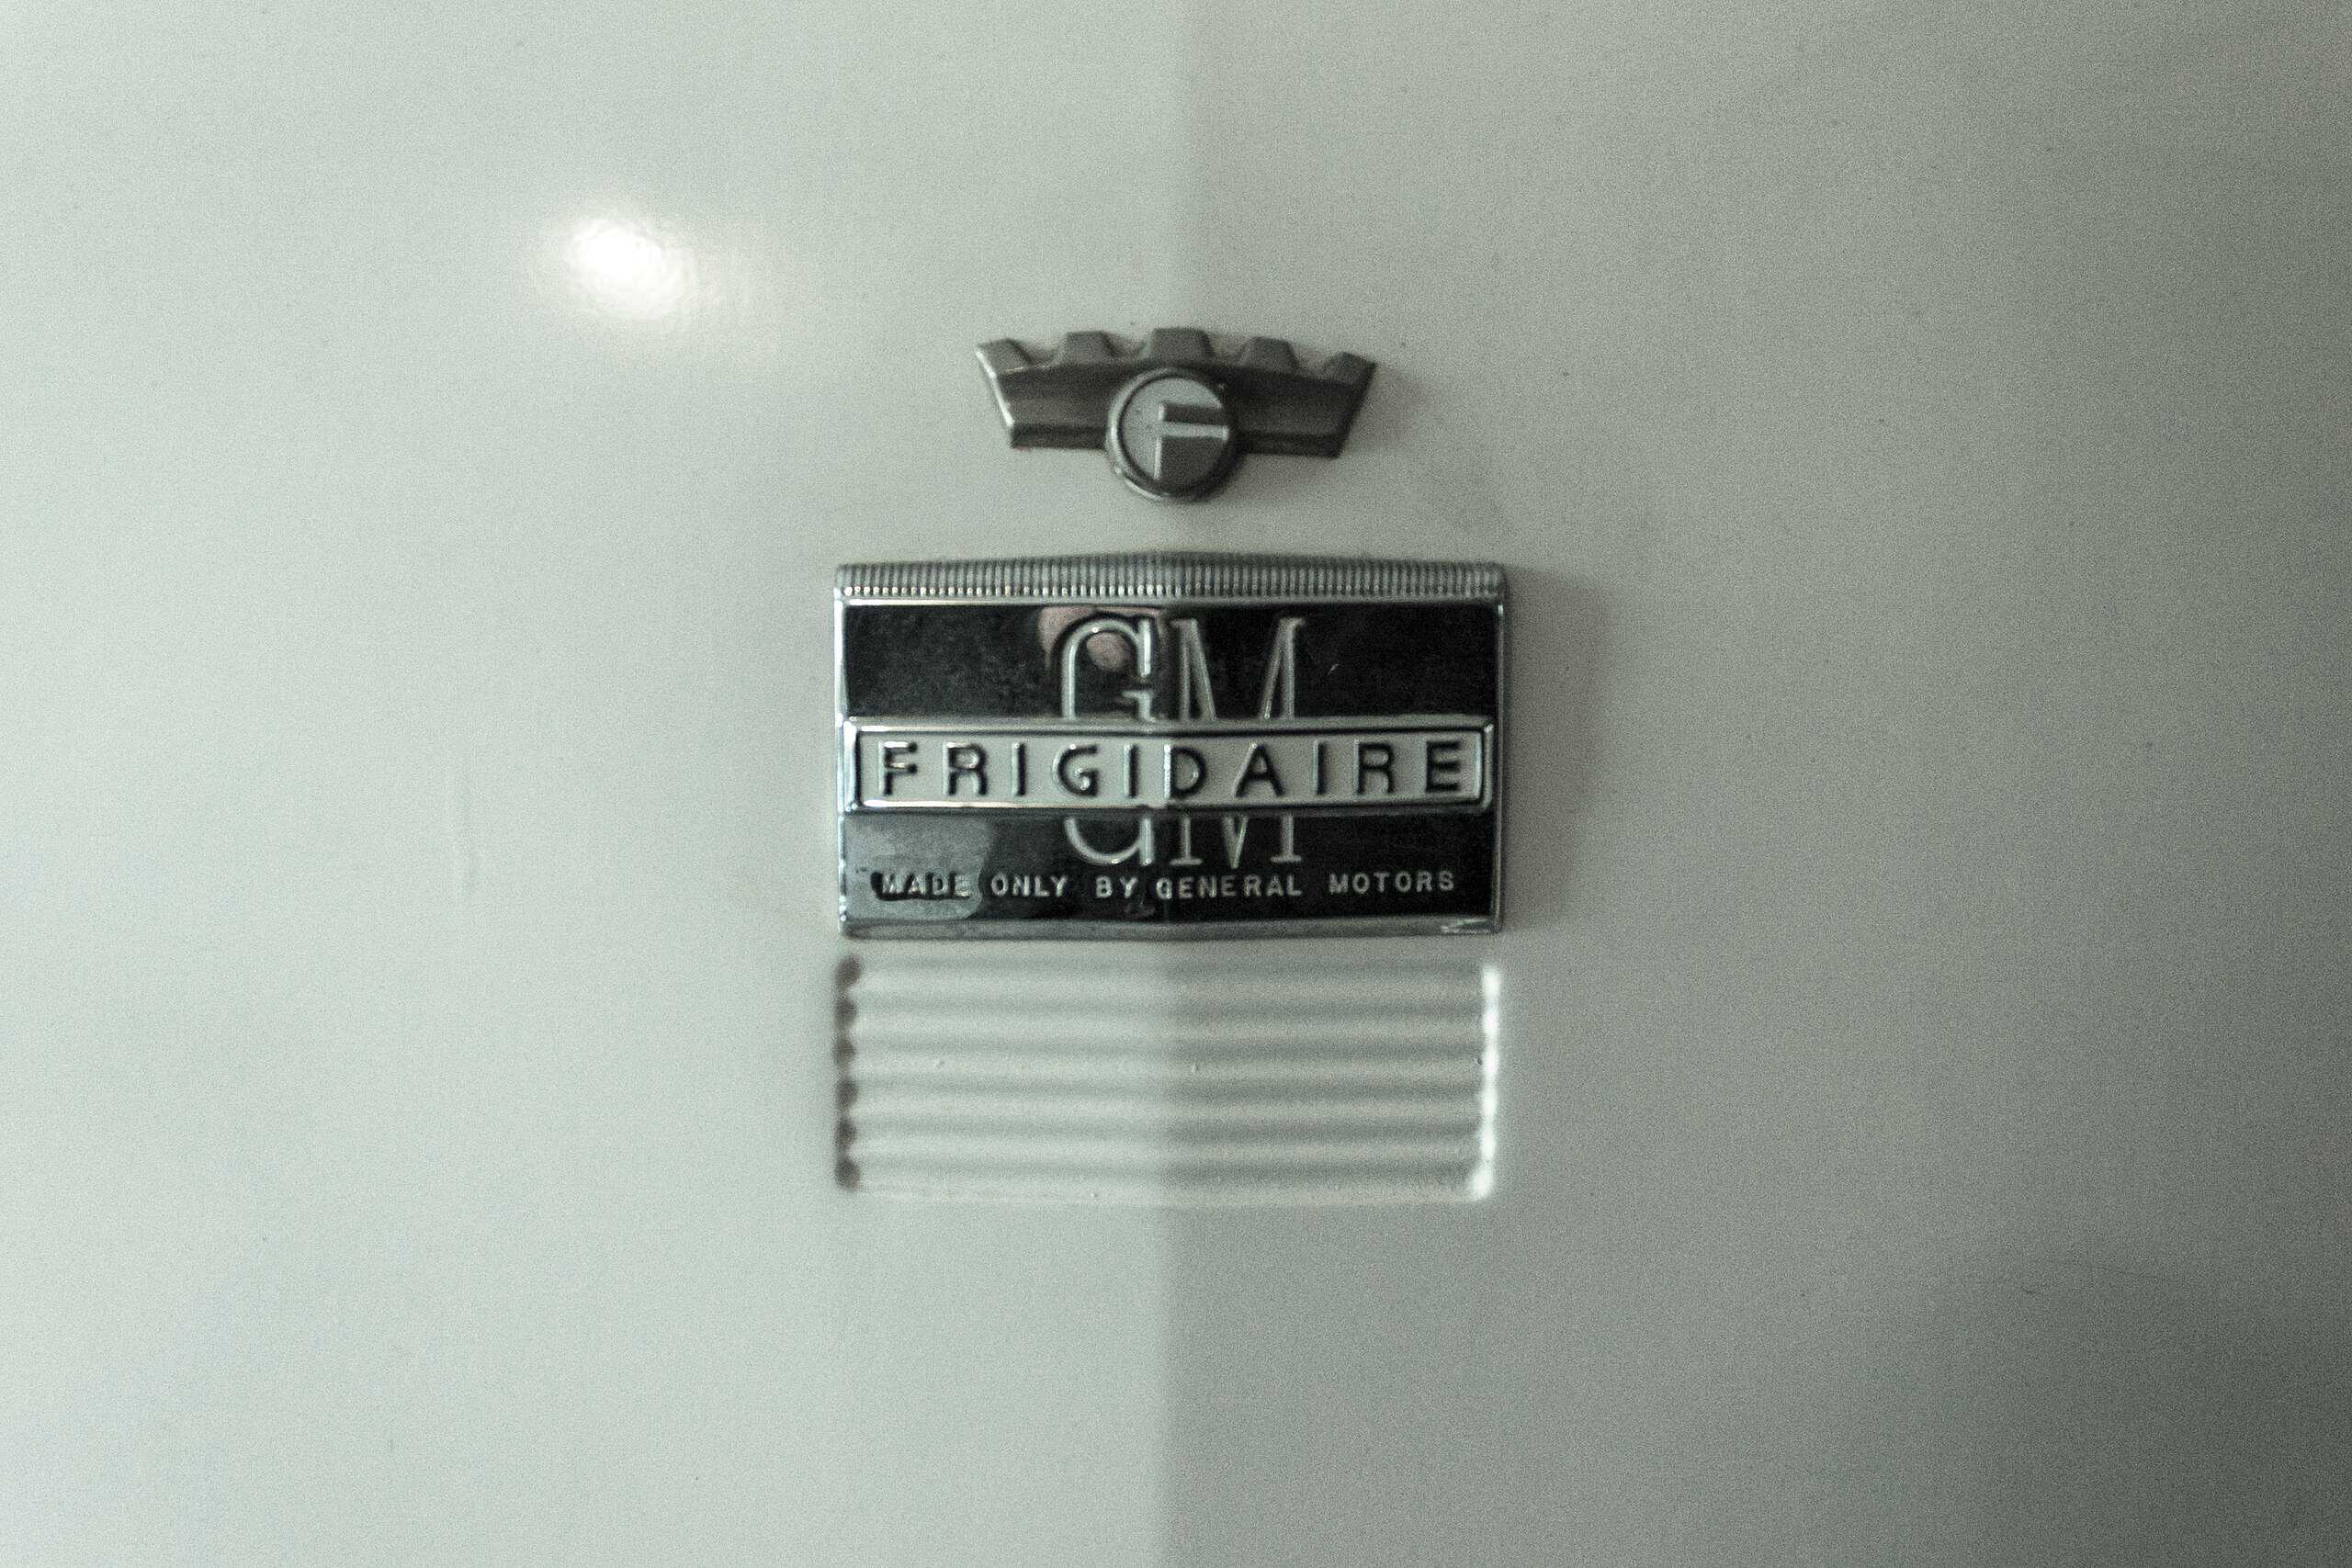 Old Frigidaire name badge